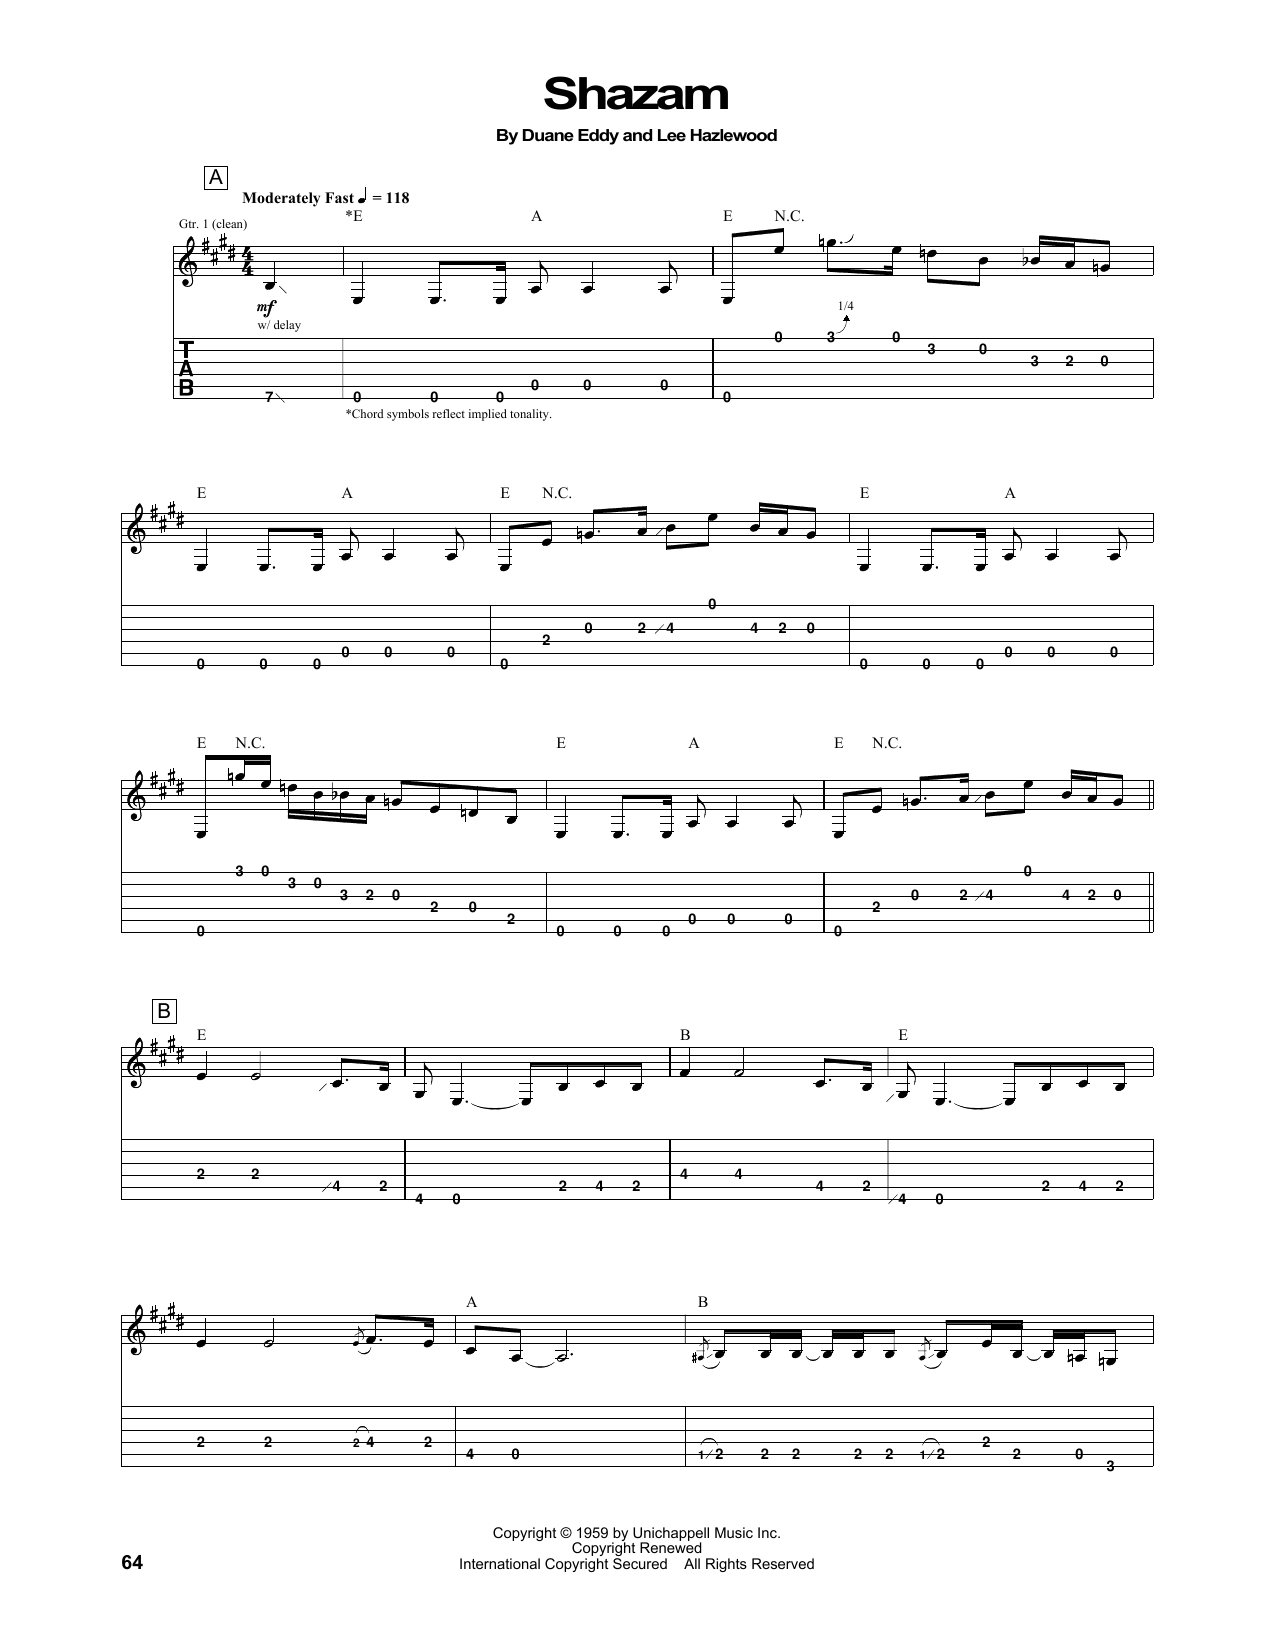 Duane Eddy Shazam Sheet Music Notes & Chords for Guitar Tab - Download or Print PDF